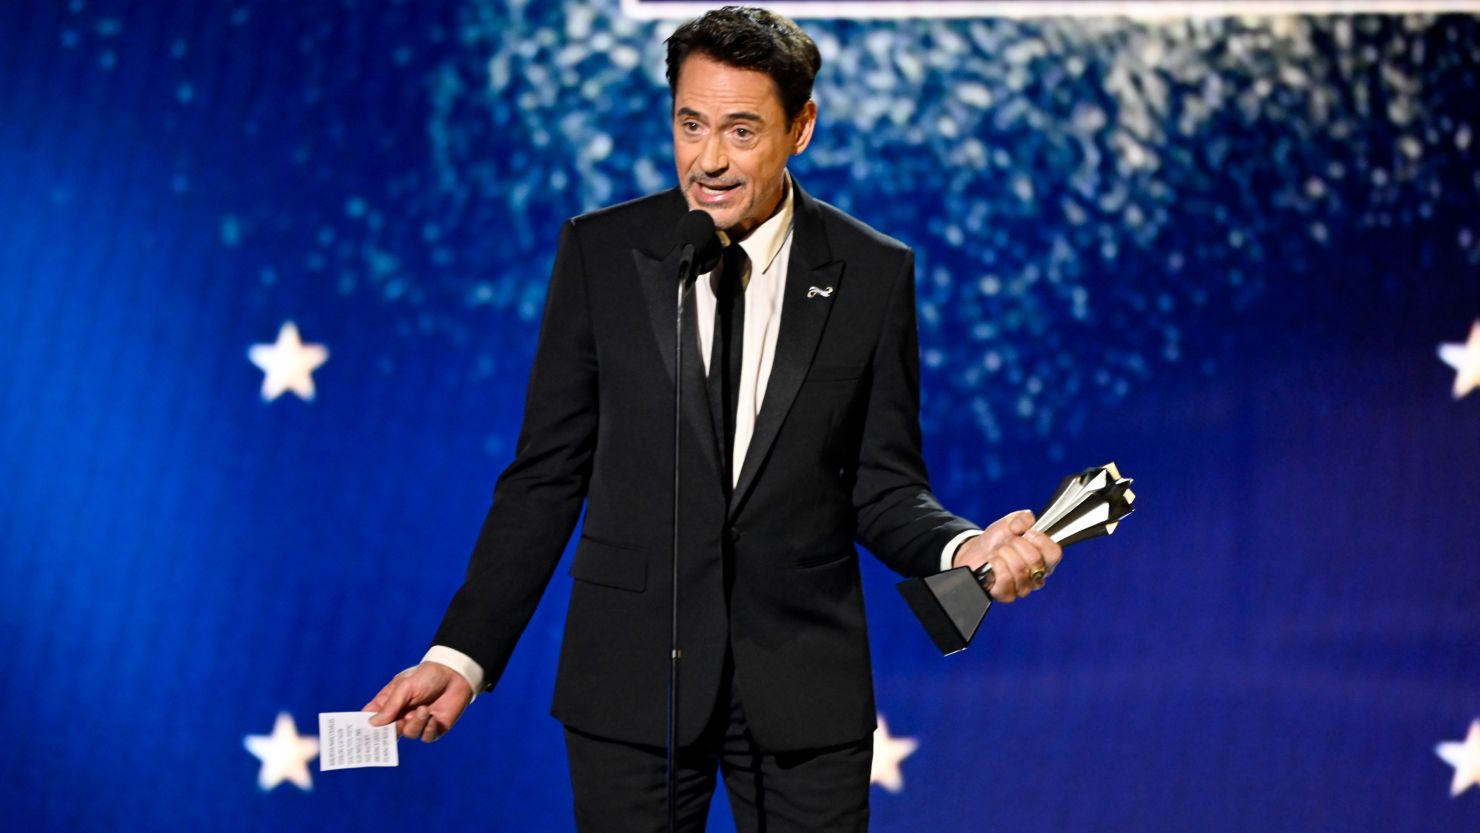 Robert Downey Jr. quotes his toughest critics in his Critics Choice